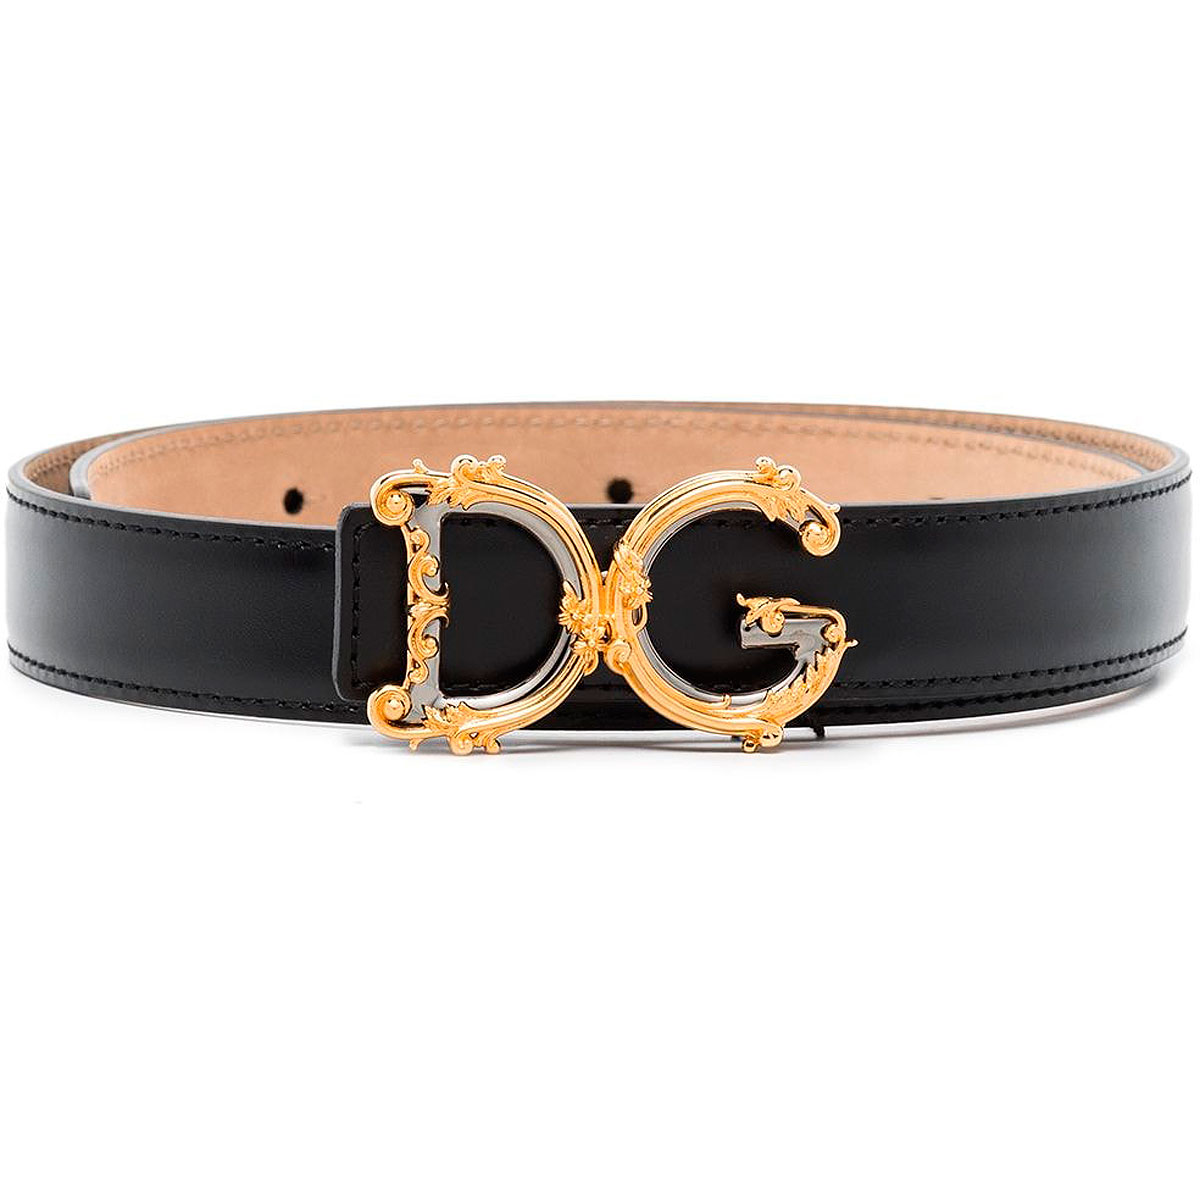 Womens Belts Dolce & Gabbana, Style code: be1348-az831-80999